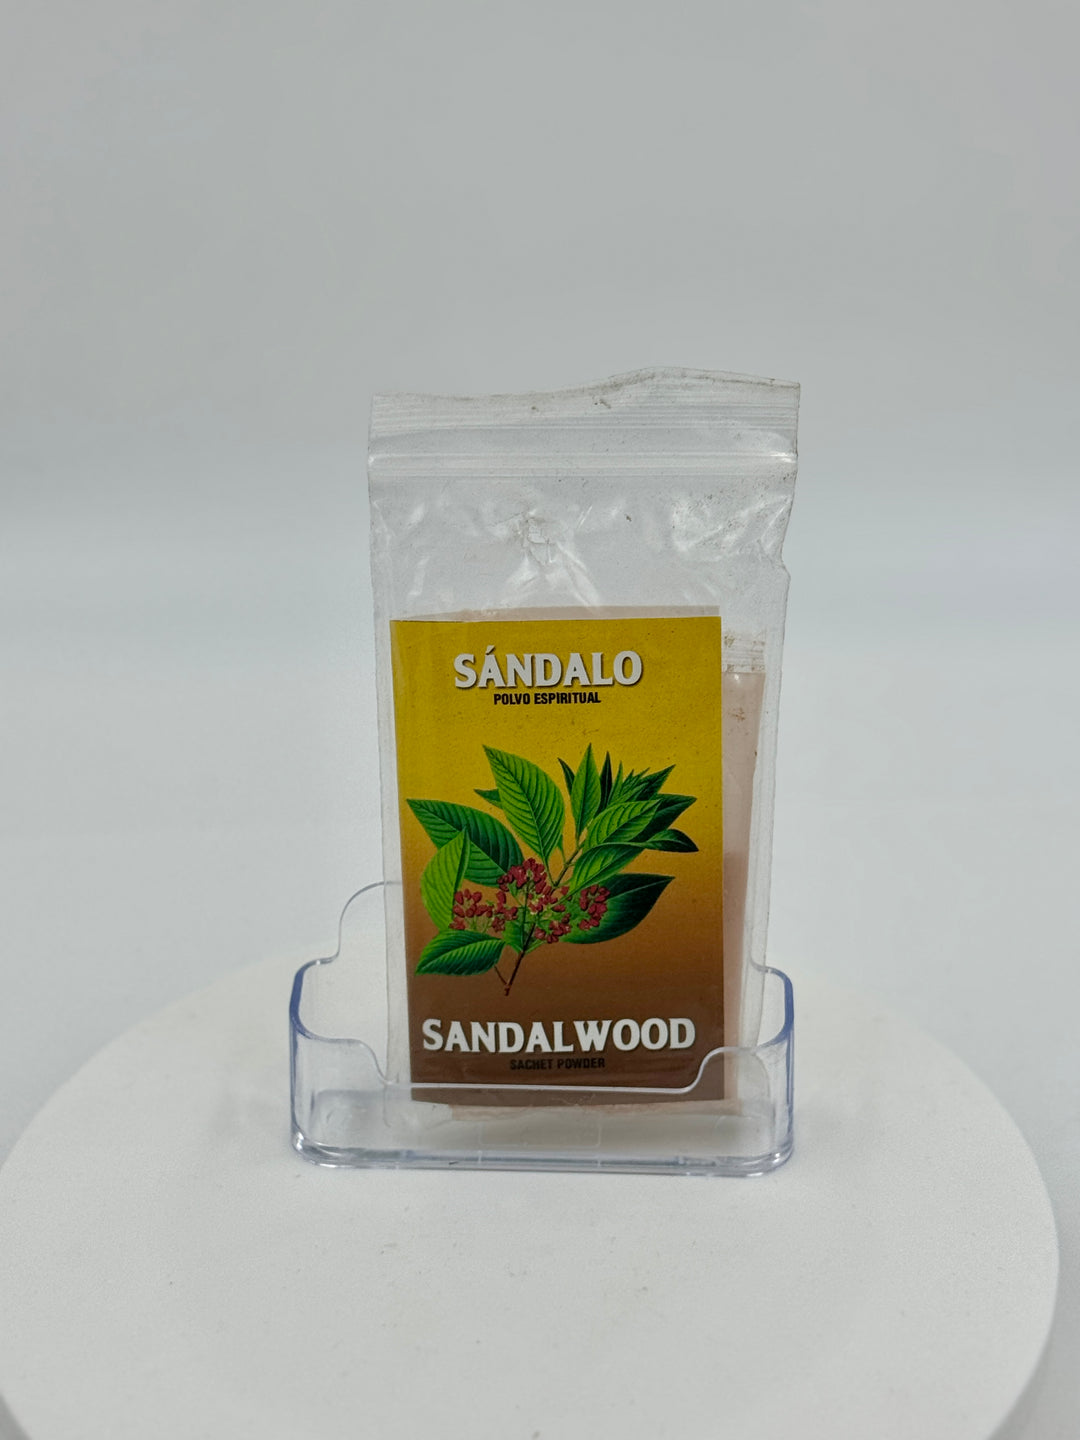 SANDALWOOD (SÁNDALO) -Powder/Polvo